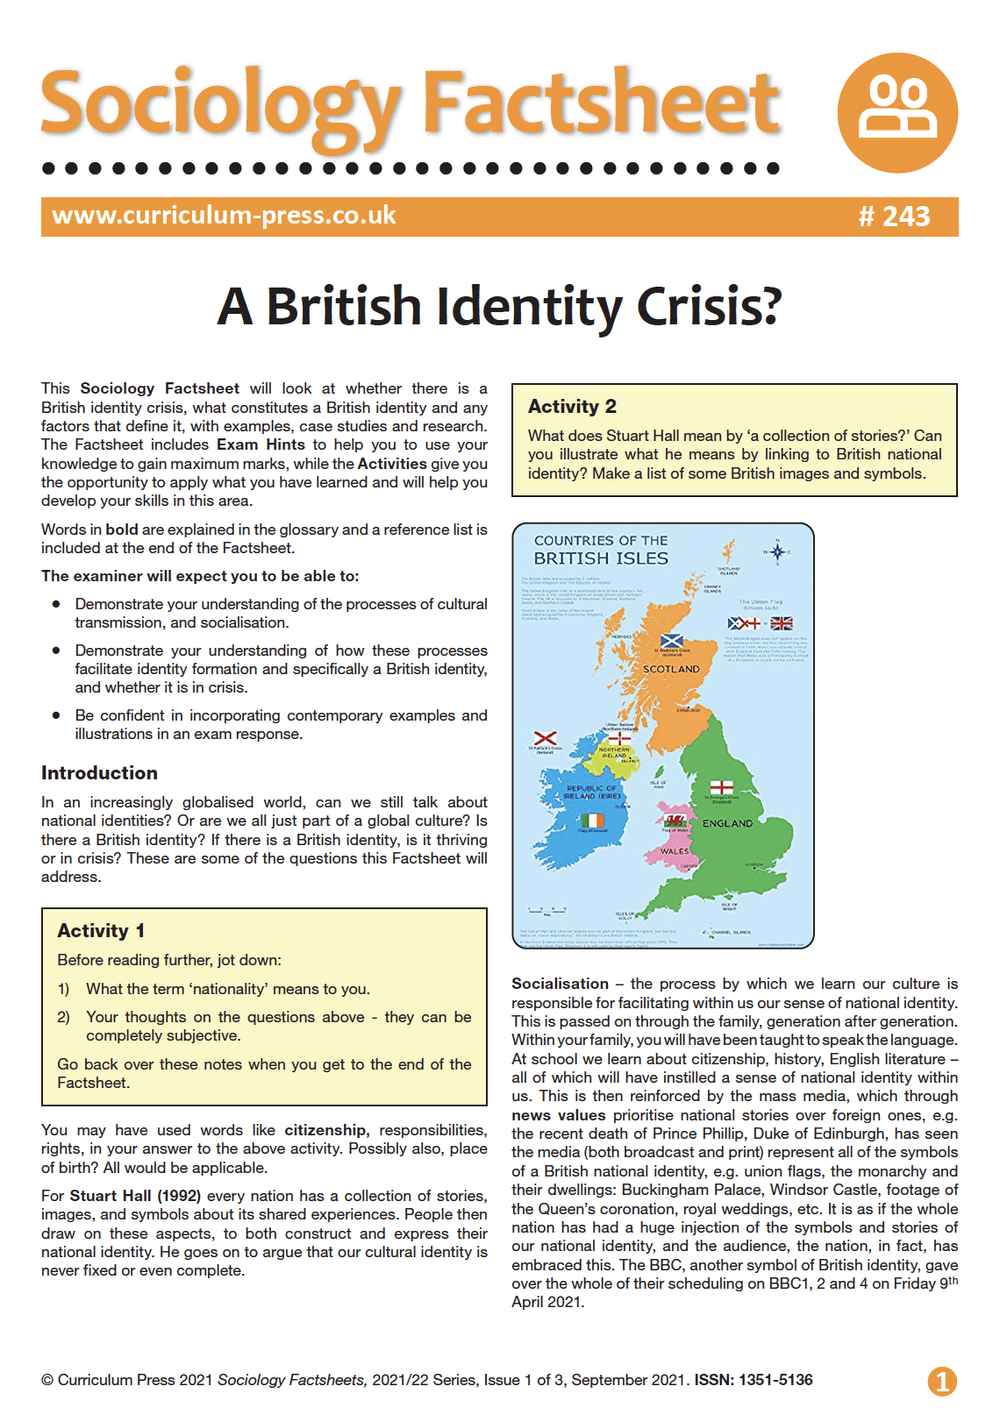 identity crisis research paper topics